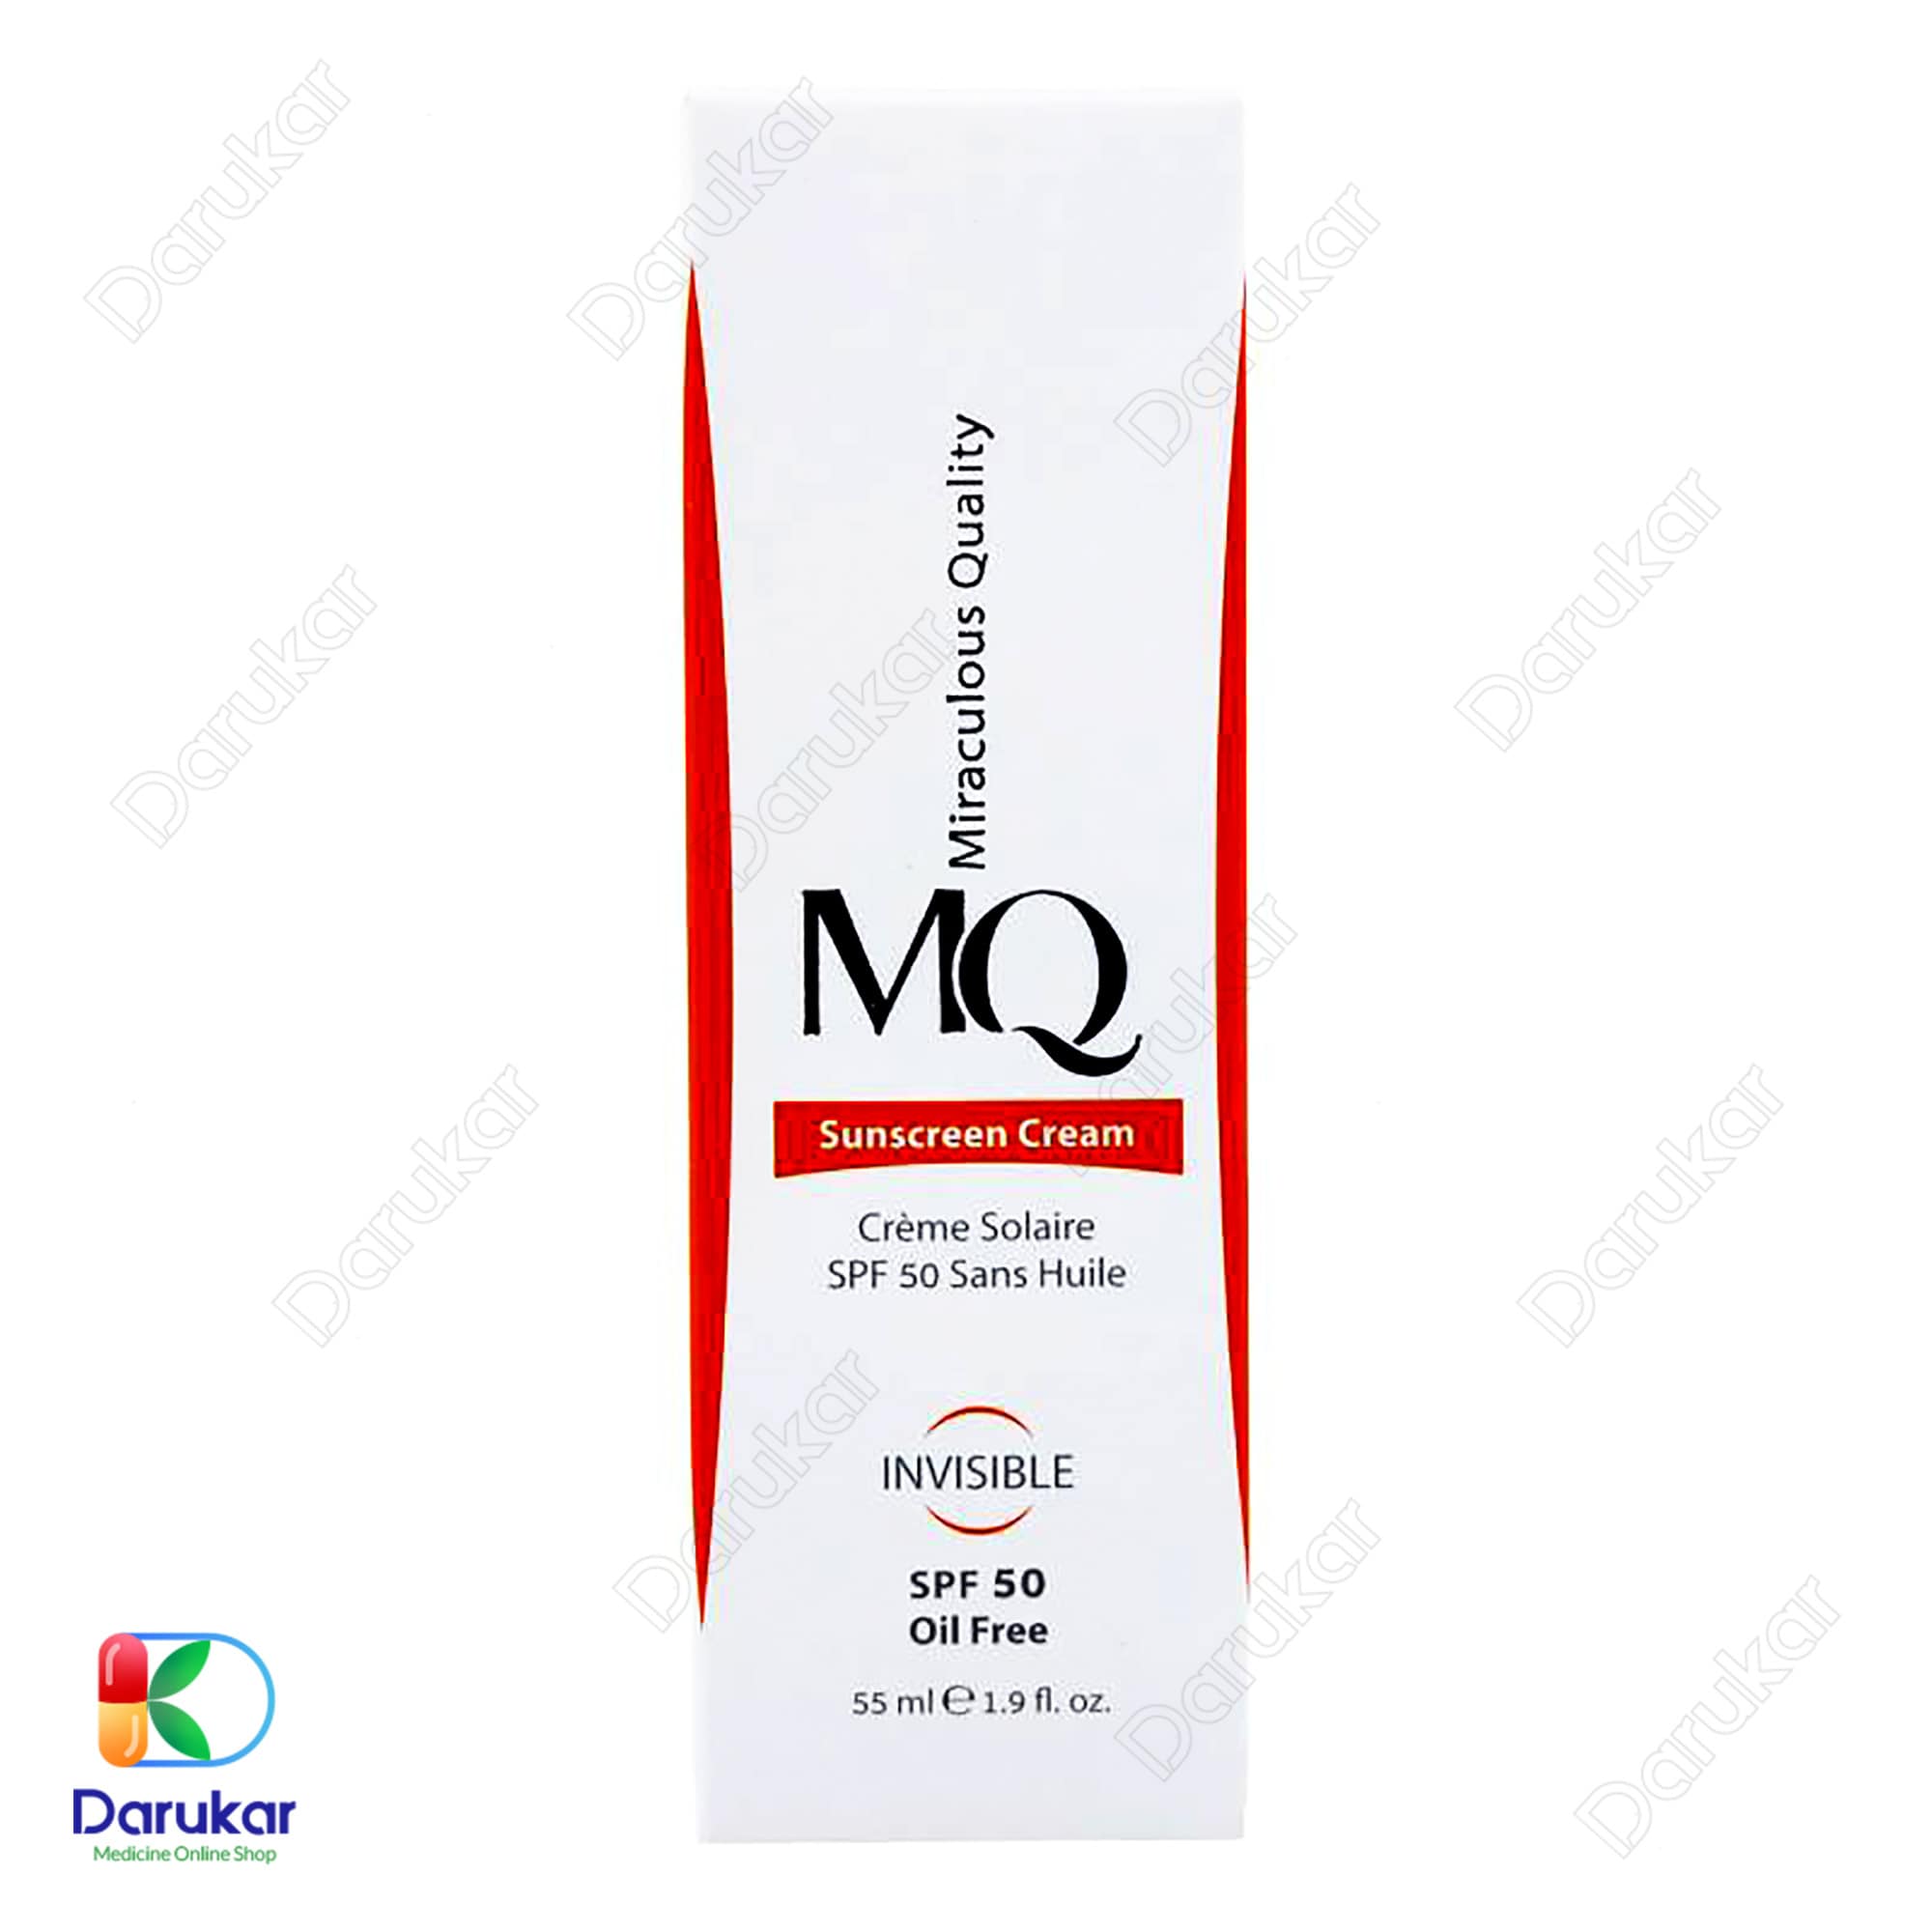 MQ Sunscreen Cream Oil Free SPF50 1